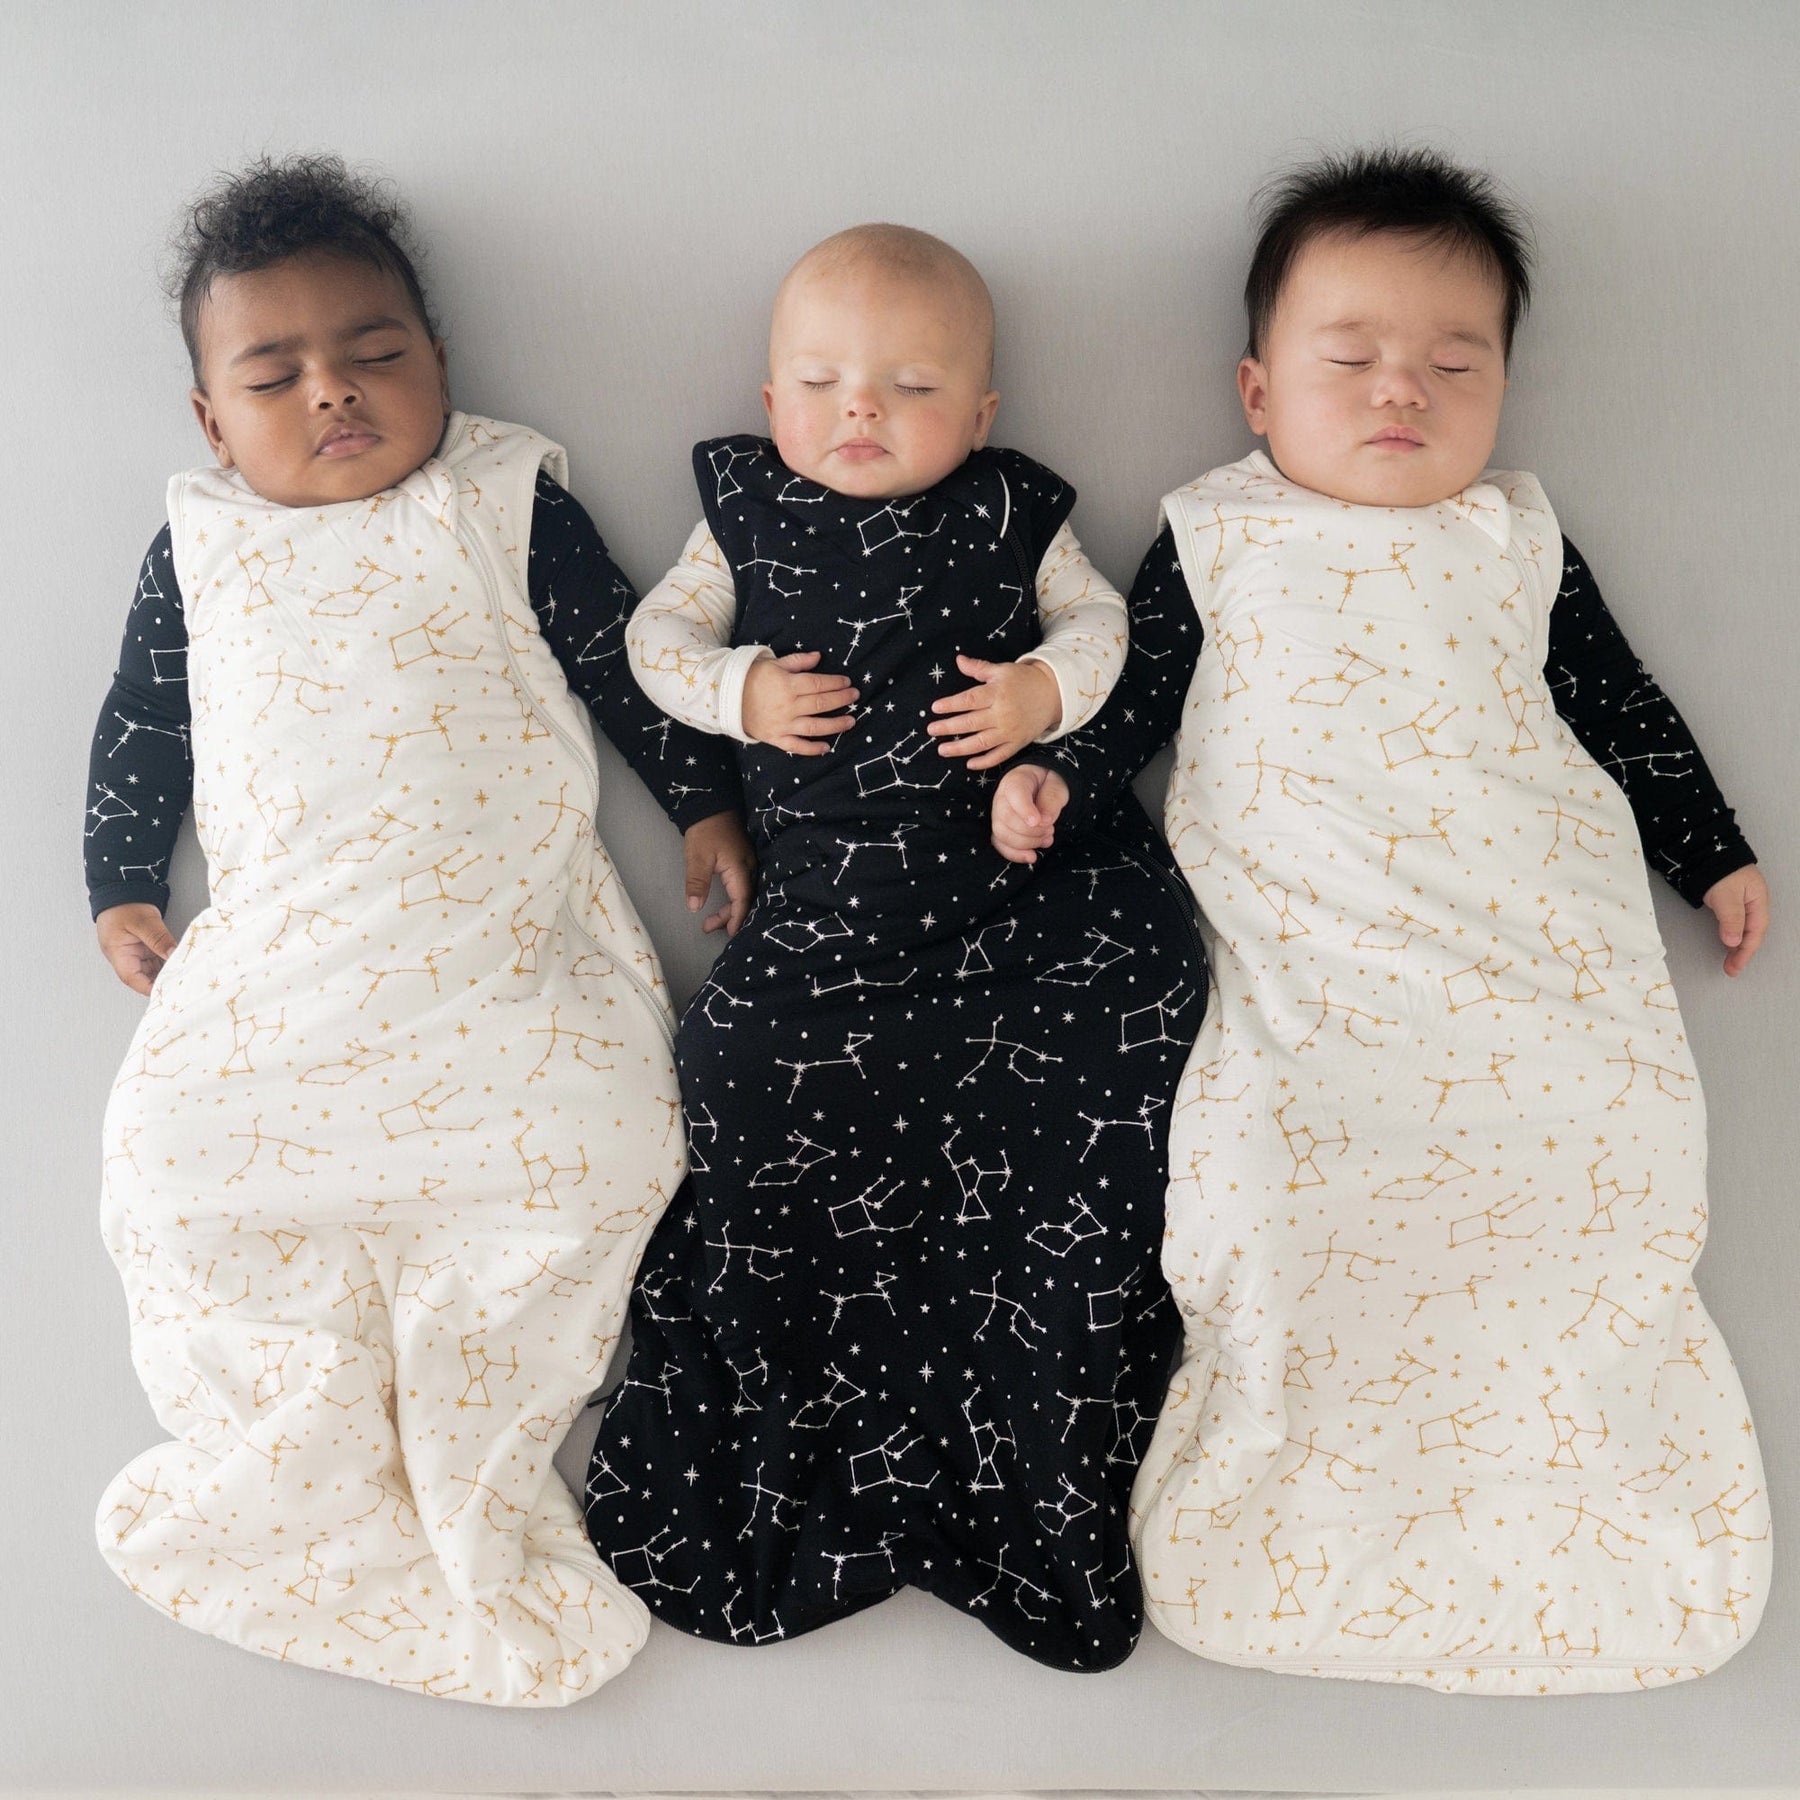 Babies wearing Kyte Baby sleep bags TOG 1.0